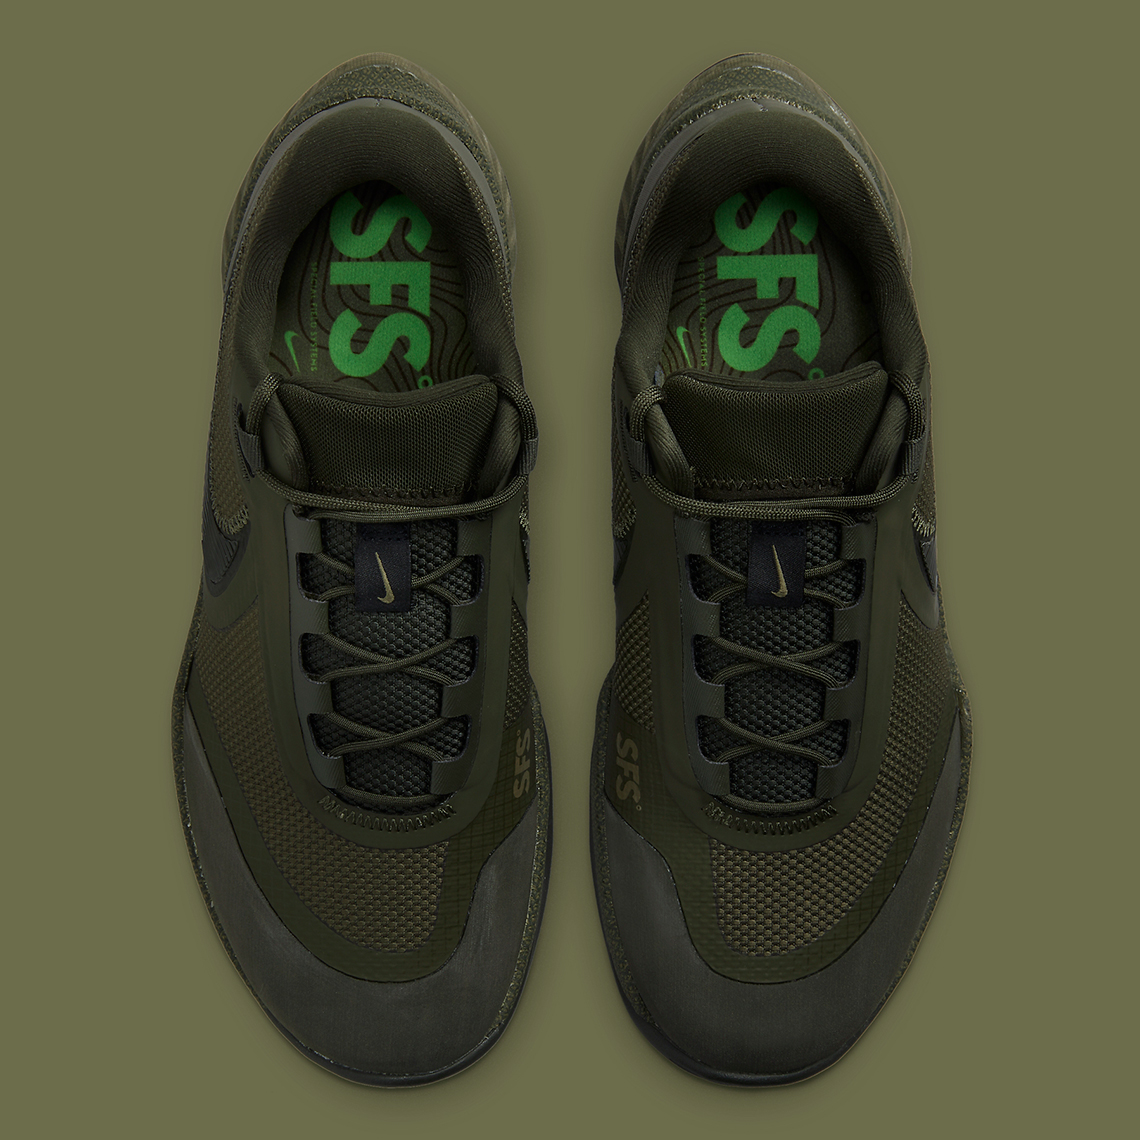 Nike React Sfb Carbon Low Olive Cz7399 330 1